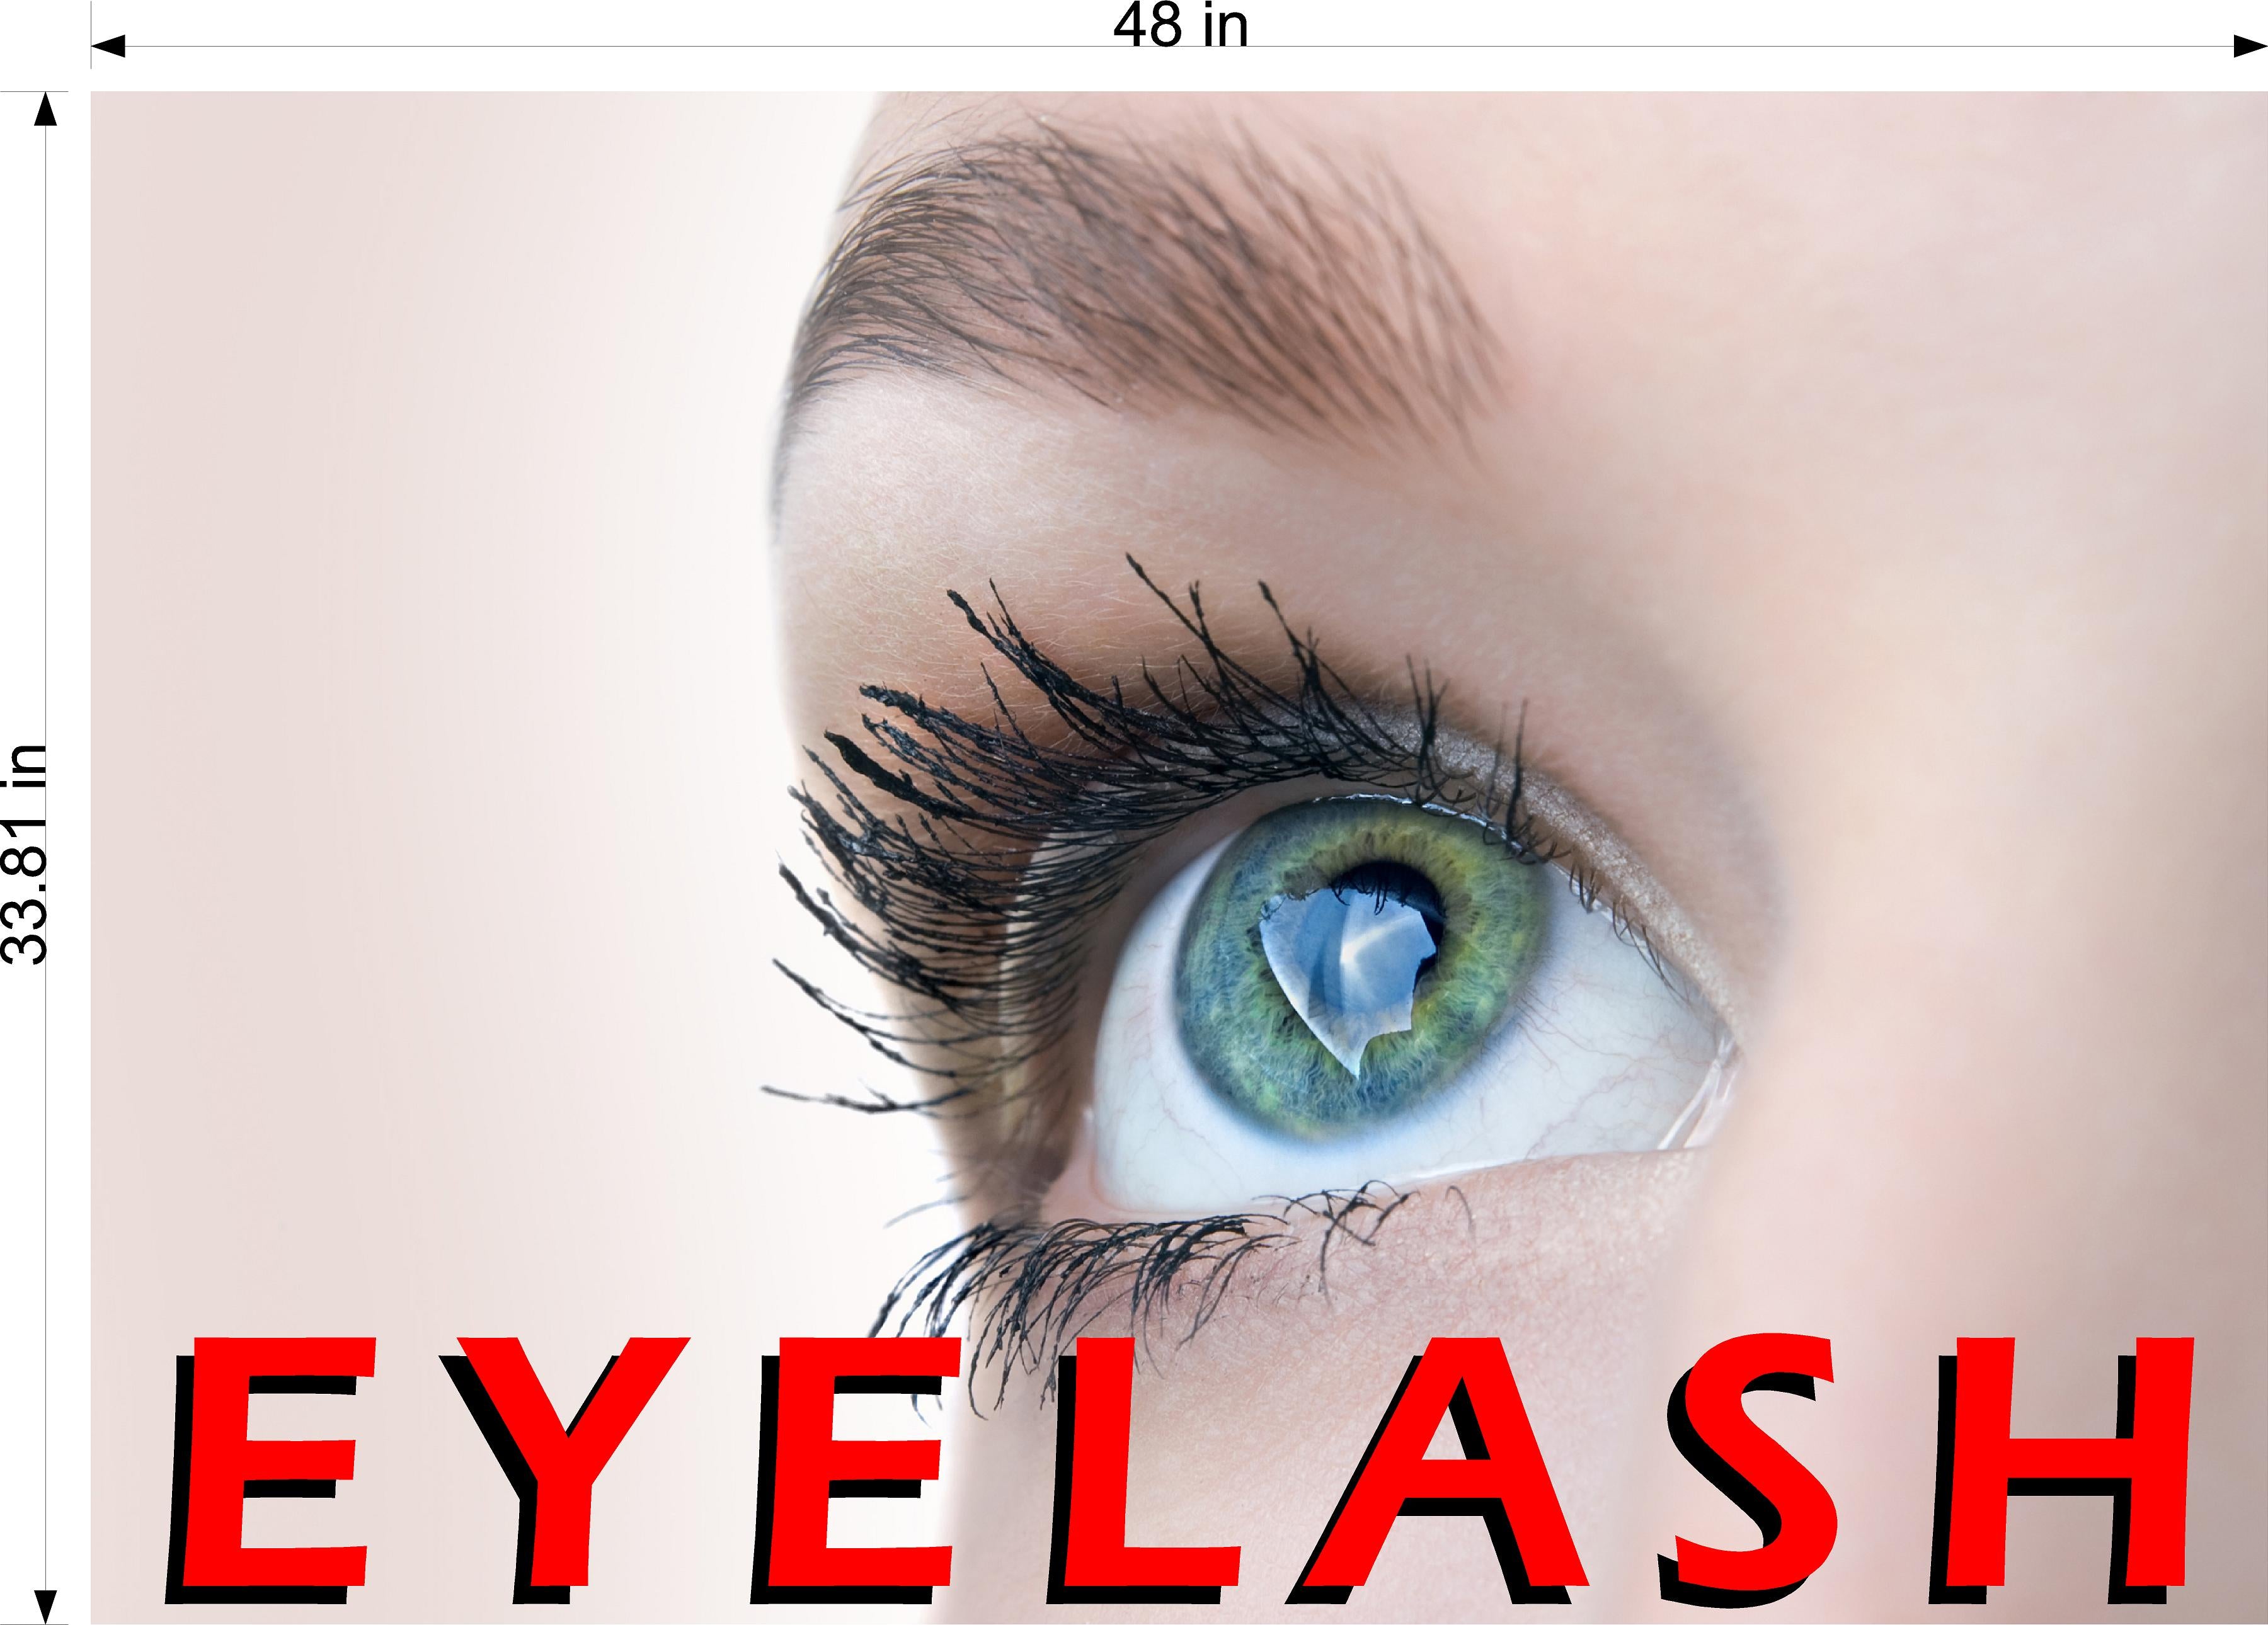 Eyelash 02 Perforated Mesh One Way Vision See-Through Window Vinyl Salon Sign Extension Horizontal